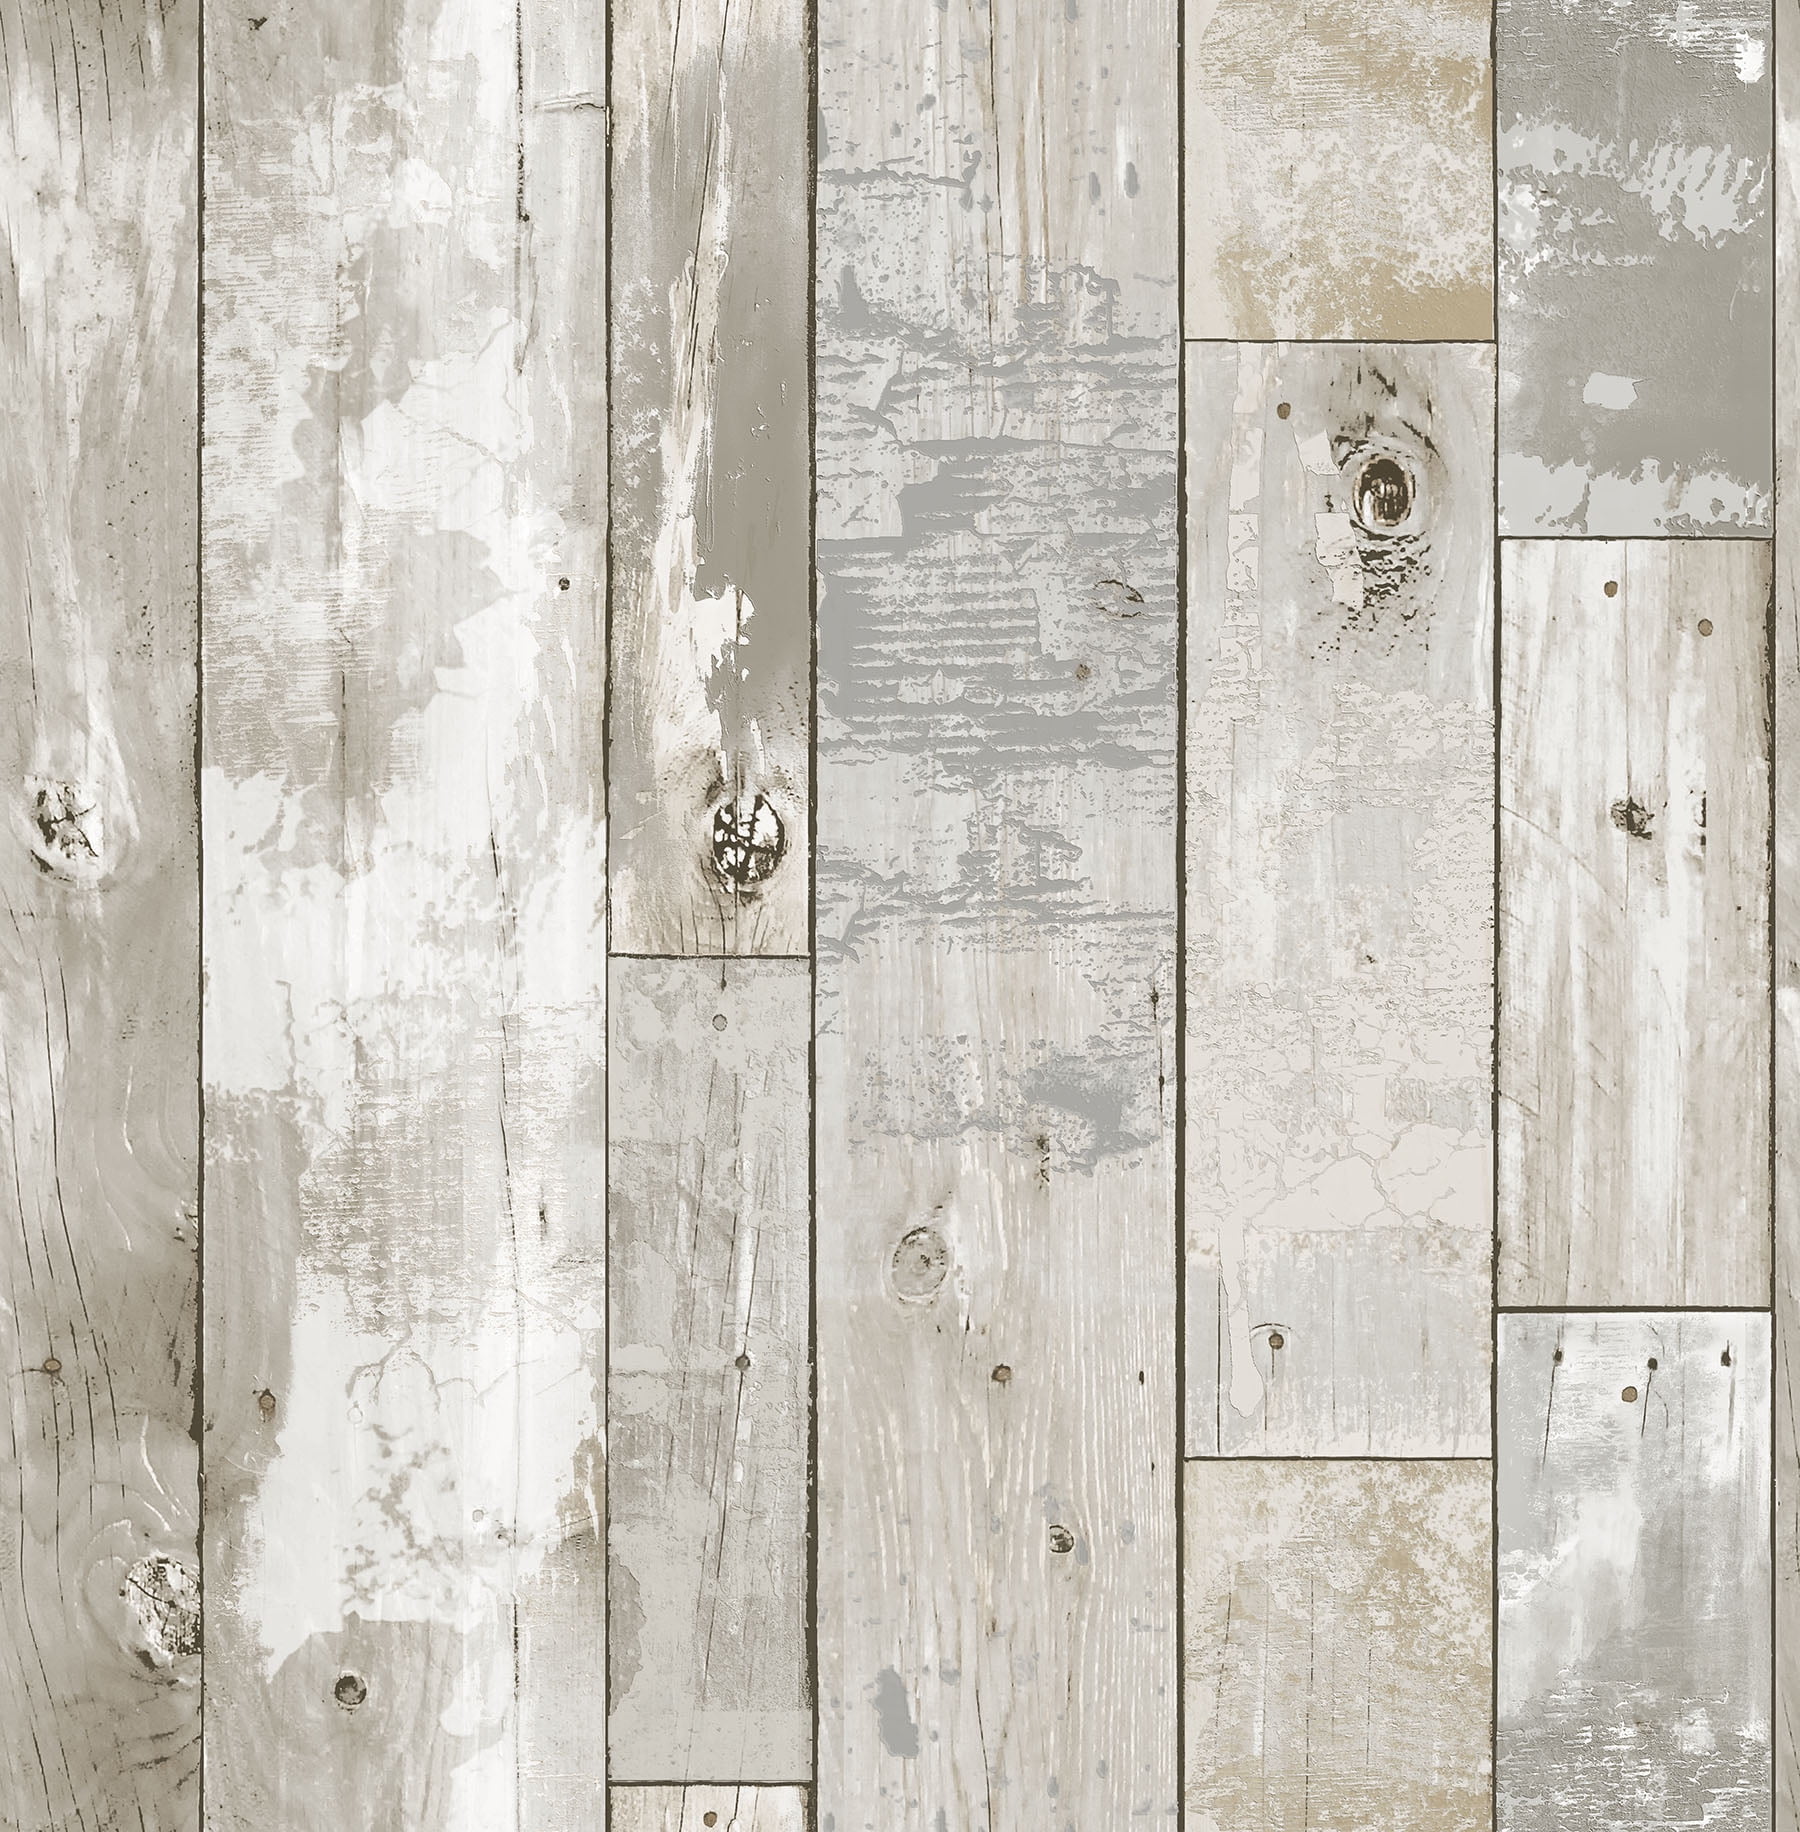 Caltero Wood Wallpaper Peel and Stick Wallpaper, Wood Plank